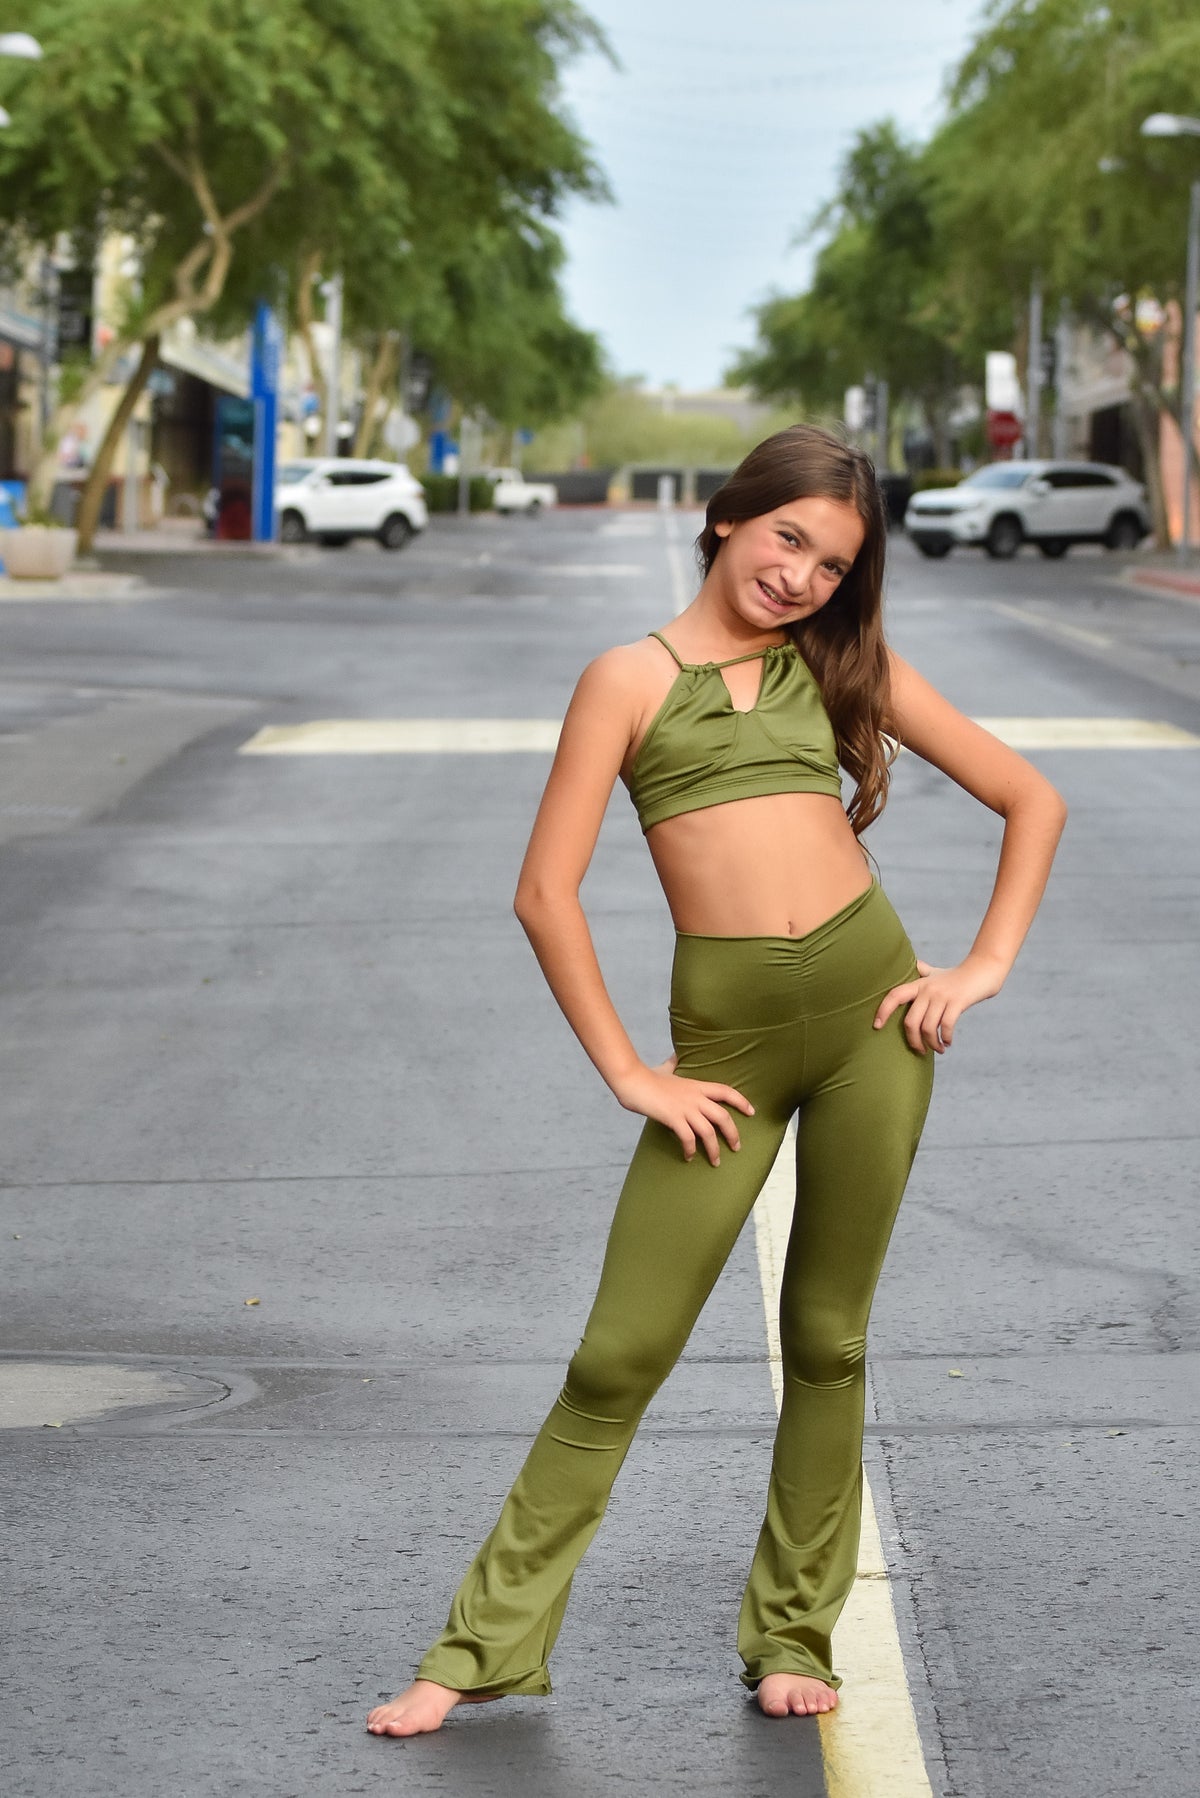 Skin Flare Leggings Costumes Second Hollywood & – Dancewear